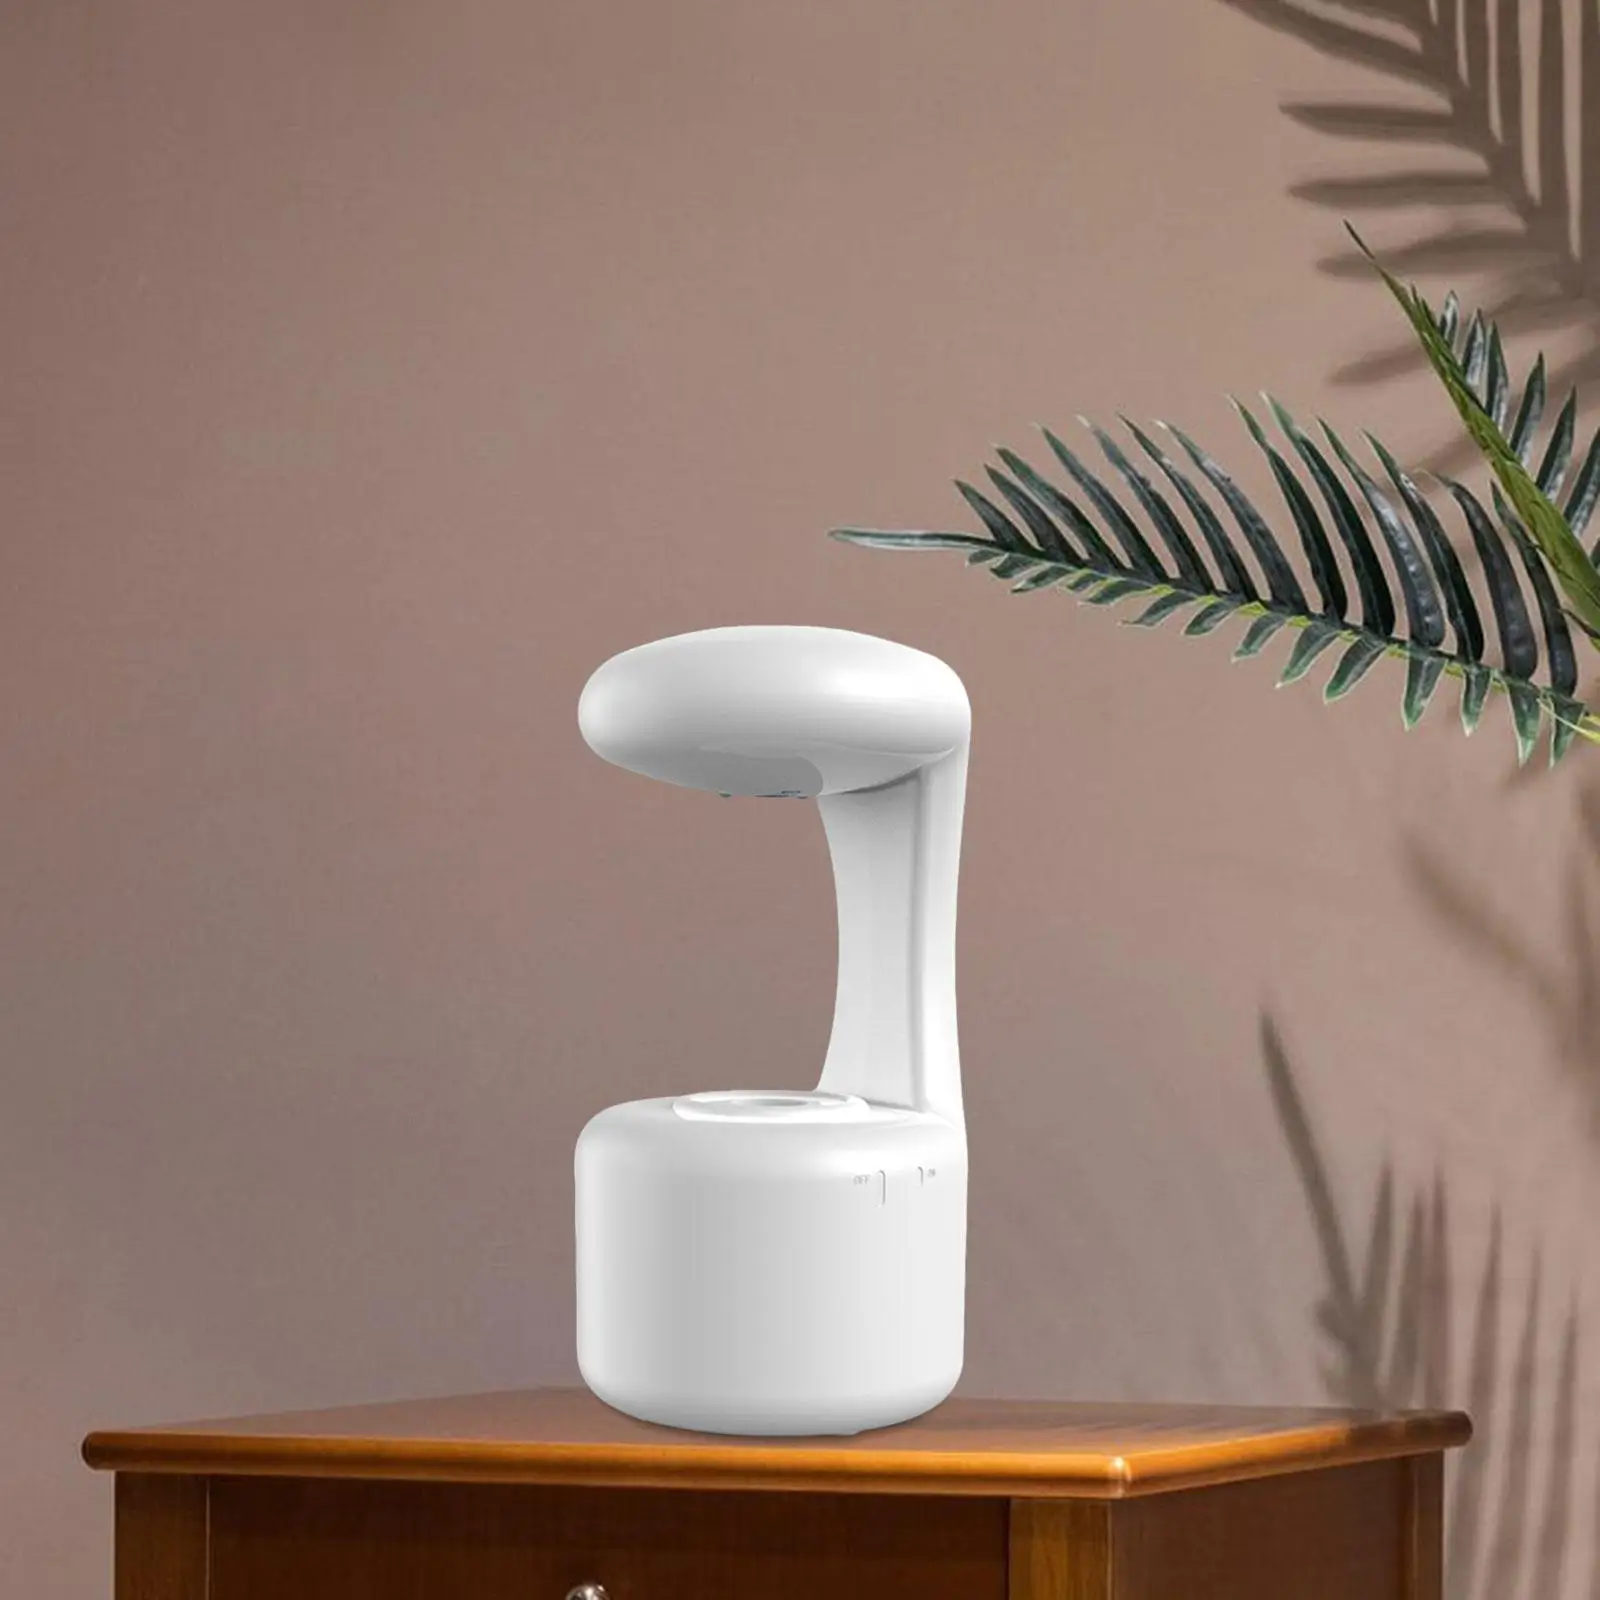 Anti Gravity Water Droplet Humidifier Tabletop for Bedroom Nursery Room